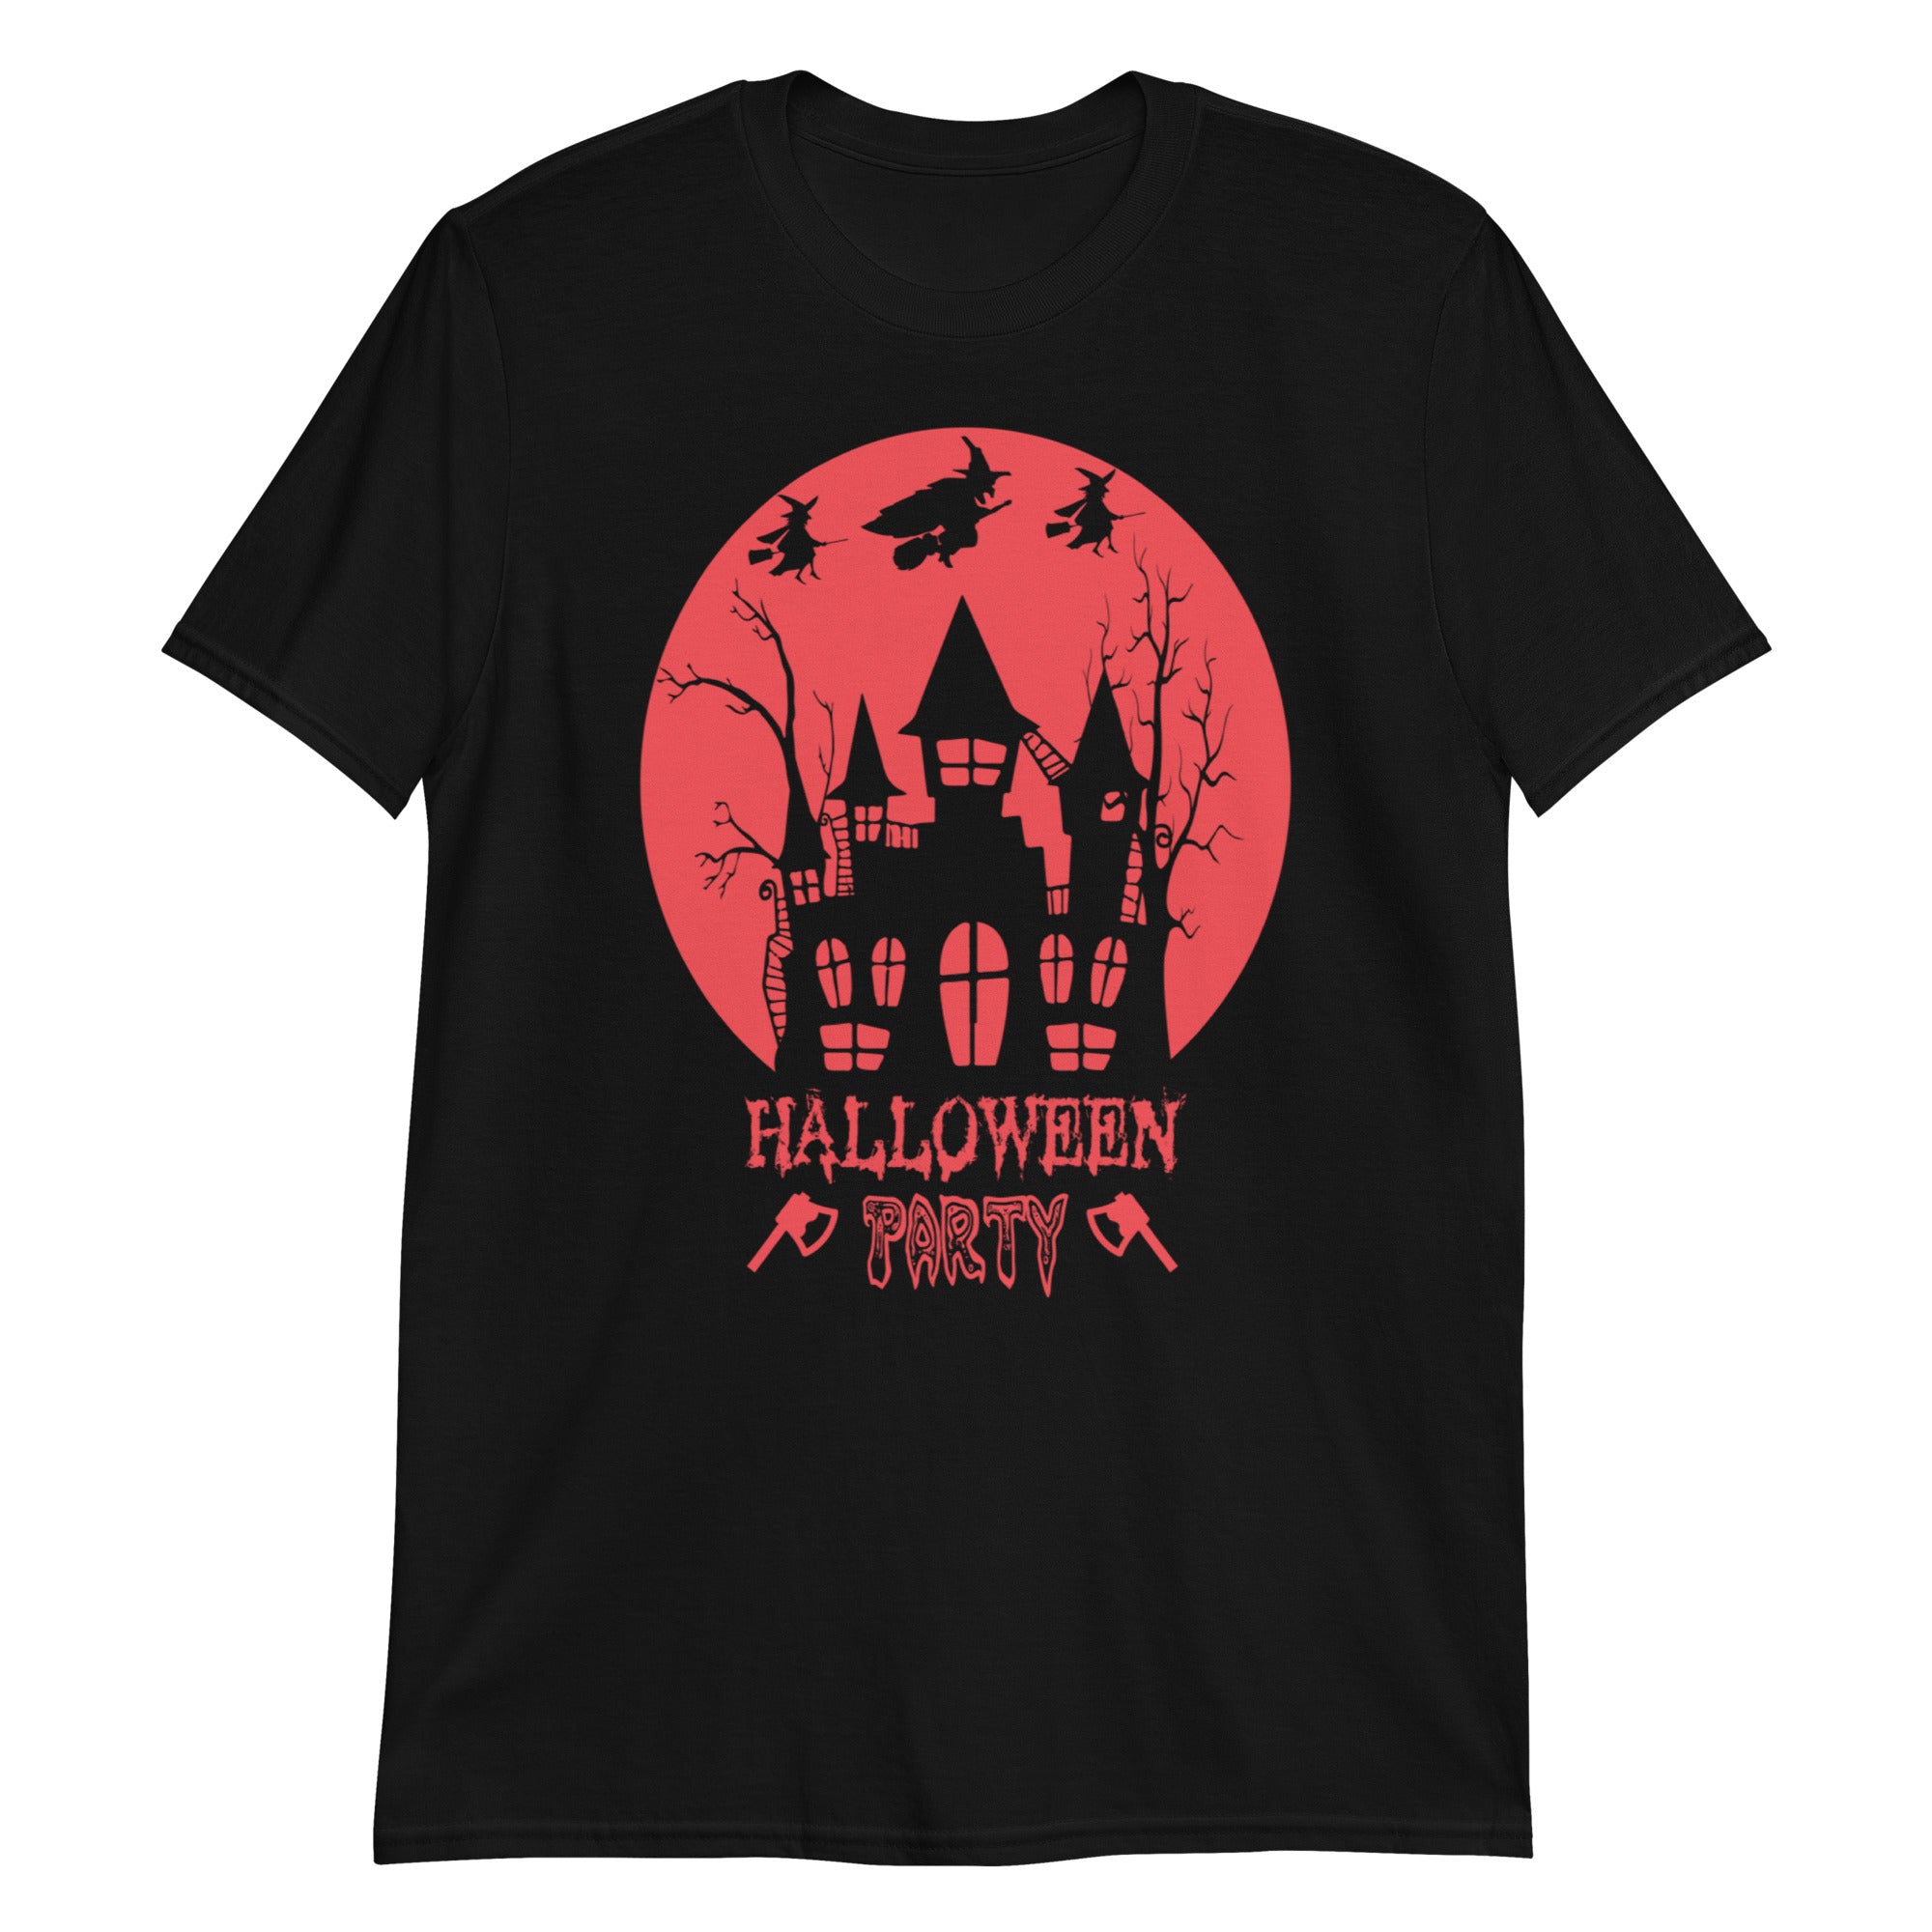 Halloween Party Style Short-Sleeve Unisex T-Shirt